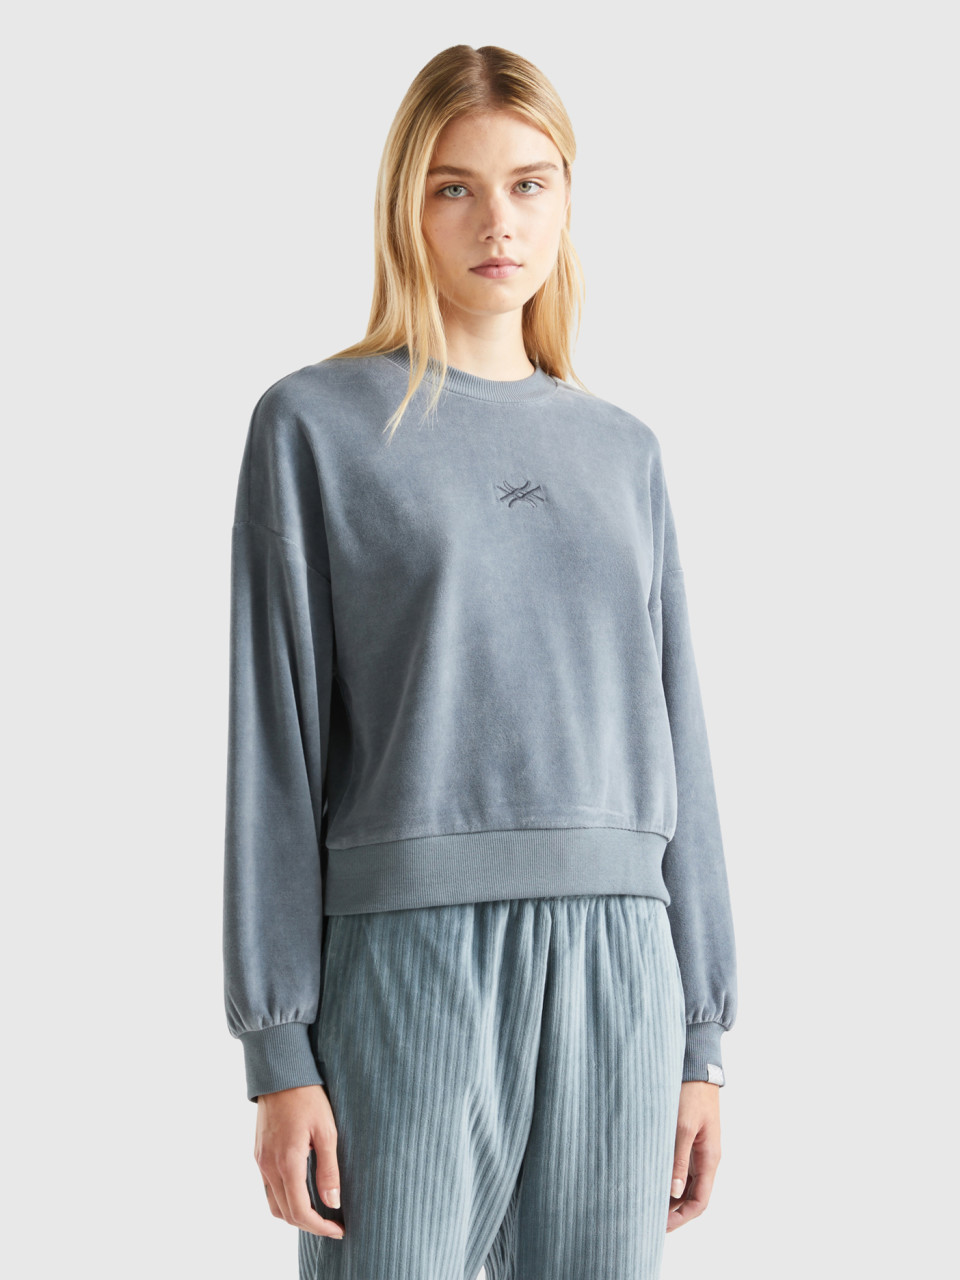 Benetton, Chenille Sweatshirt, Dark Gray, Women